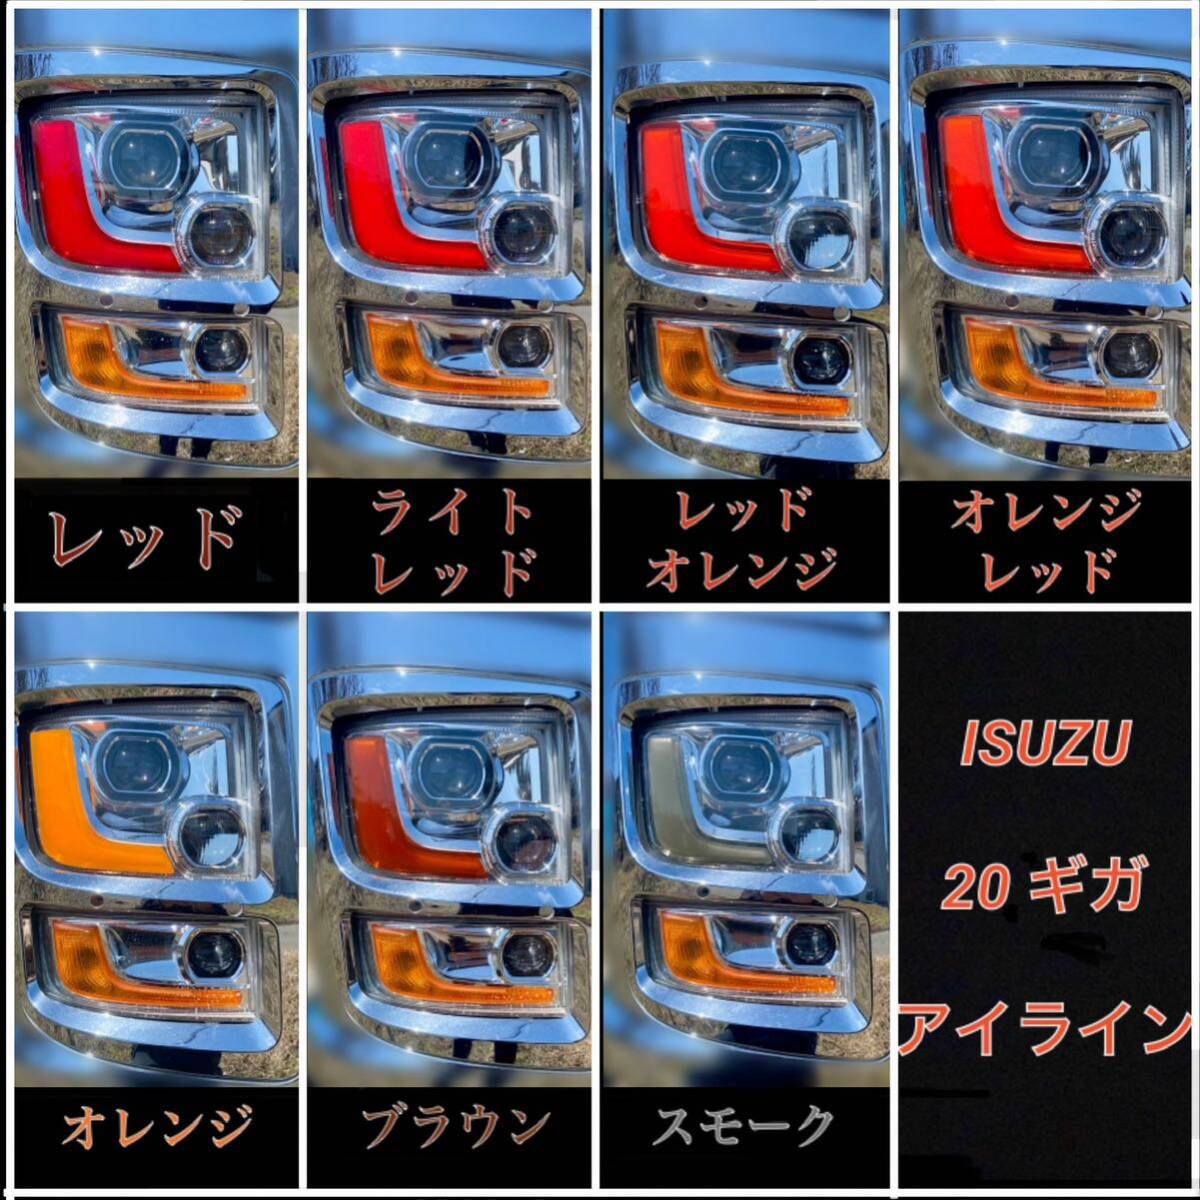 ISUZU 20ギガ ファイブスター アイライン【オレンジ】_画像2